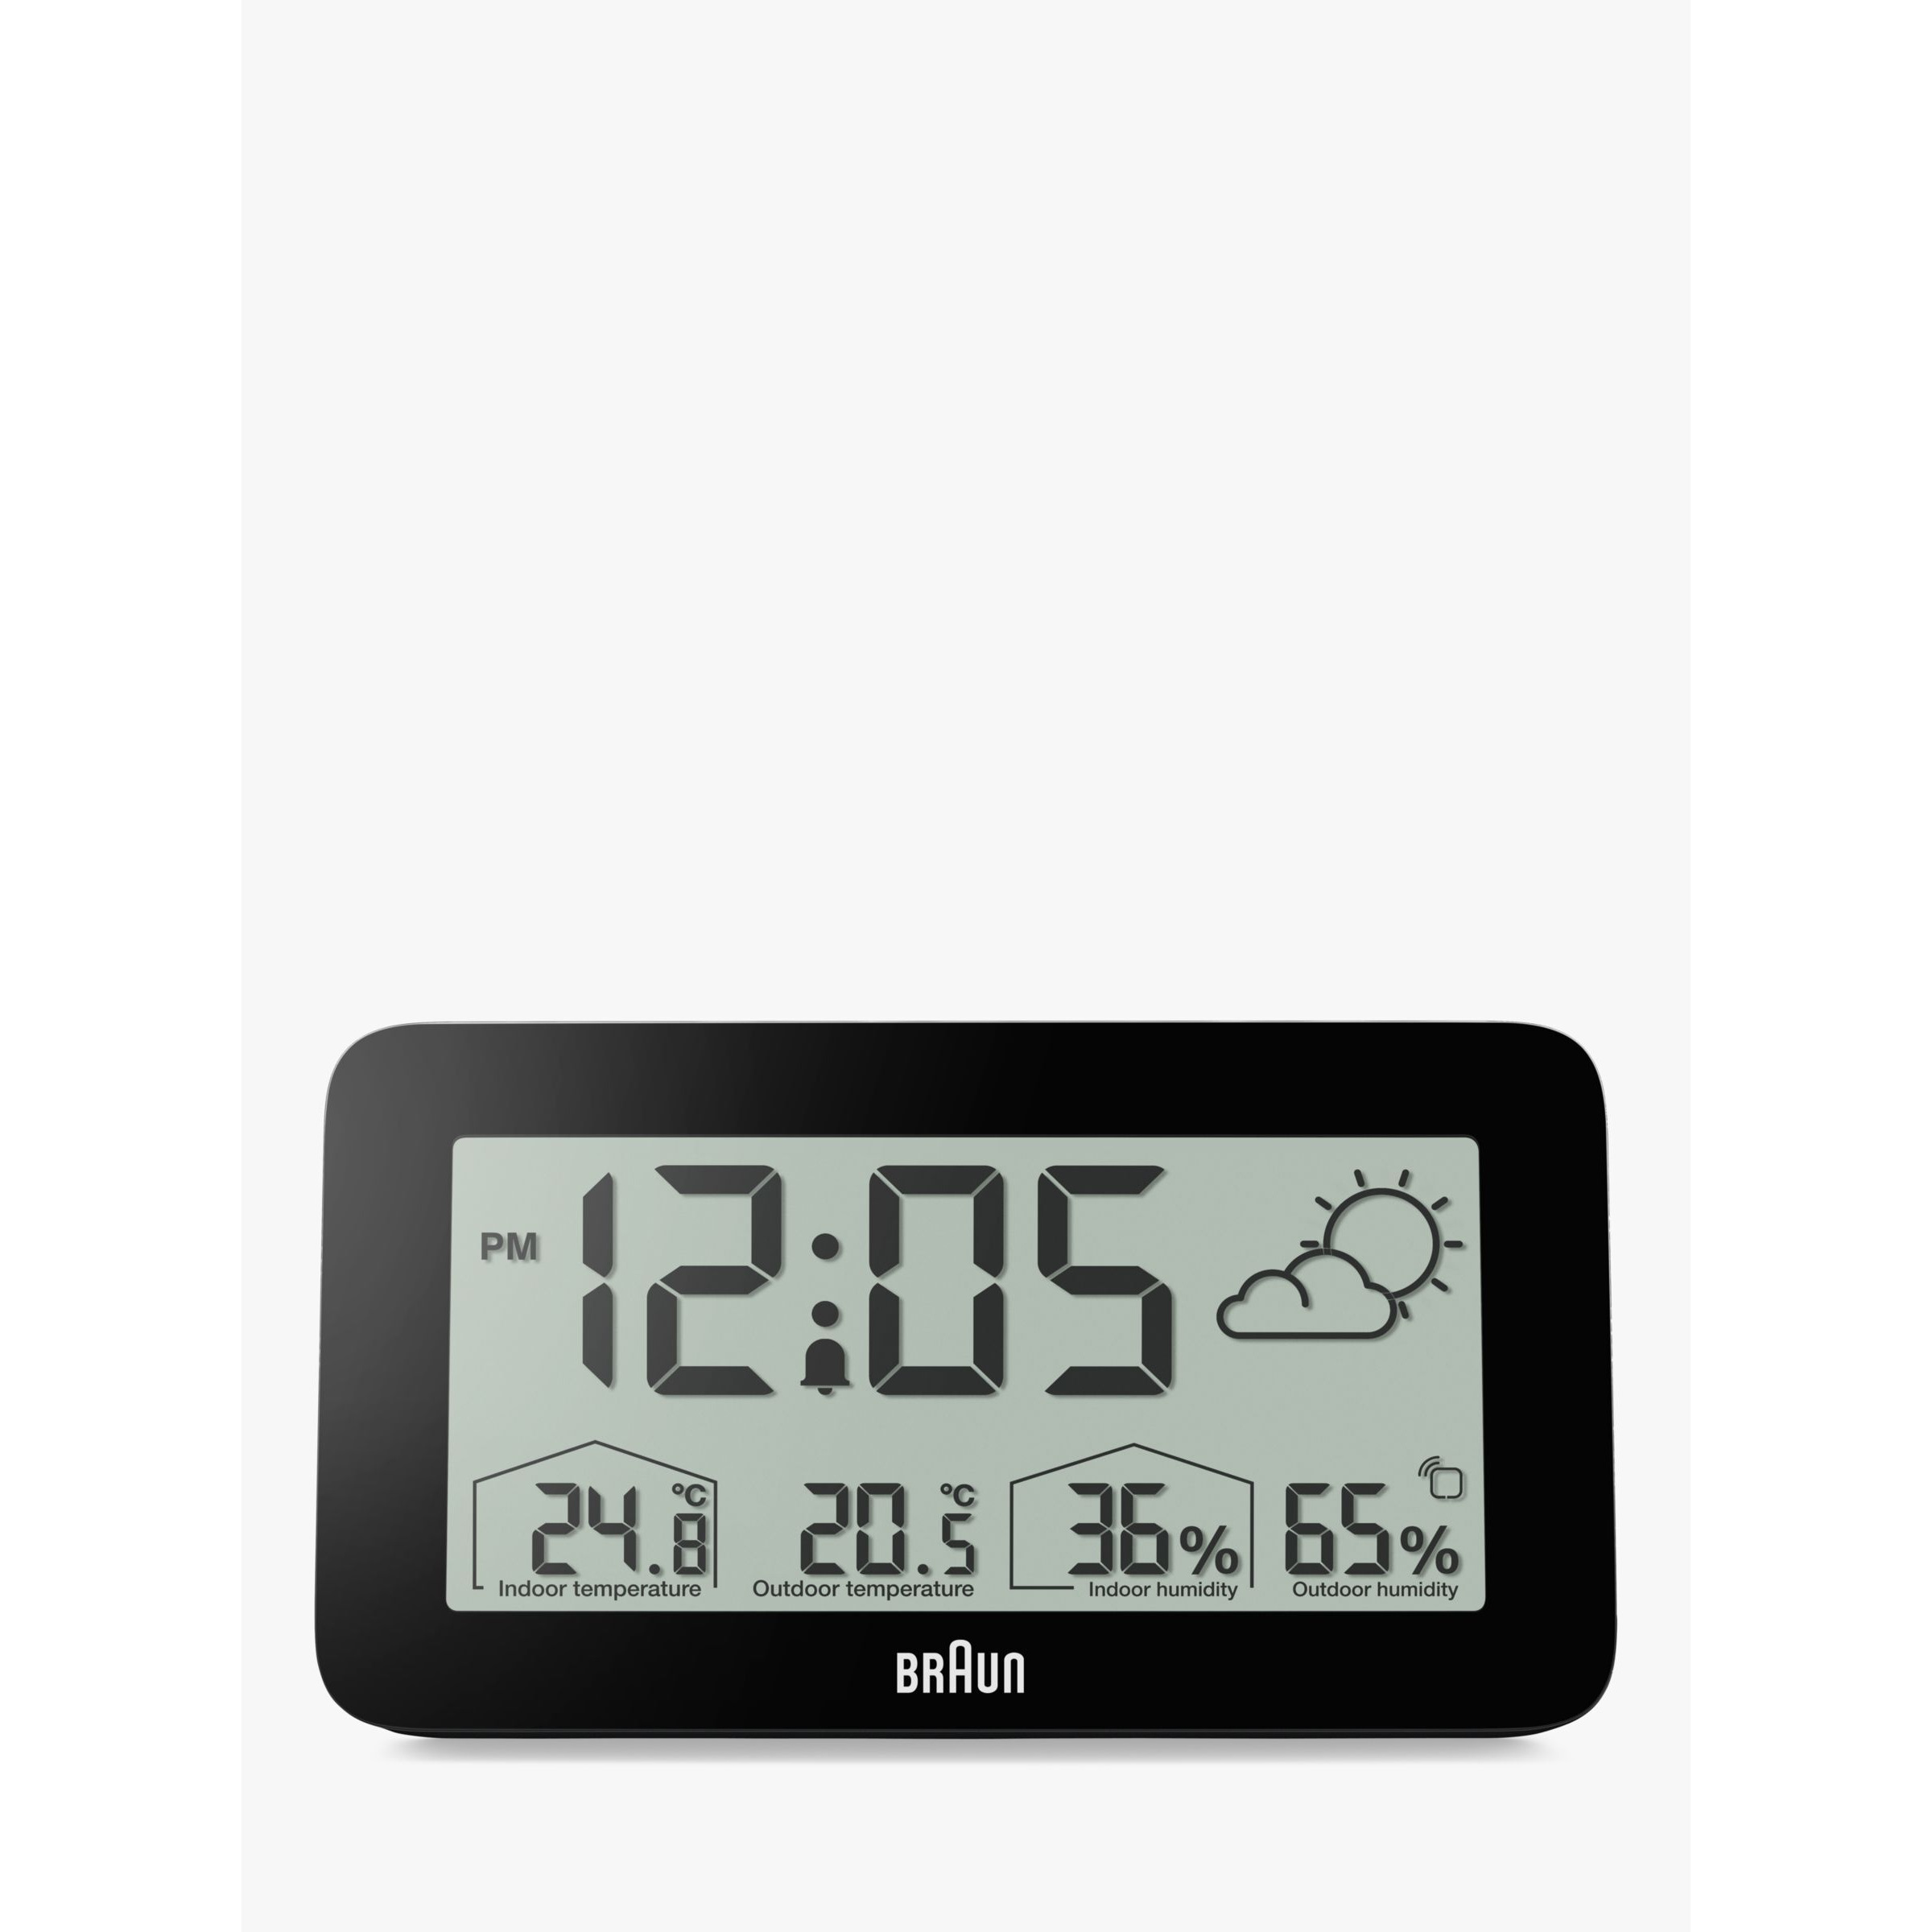 Braun BC13 LCD Digital Weather Station Alarm Clock, Black